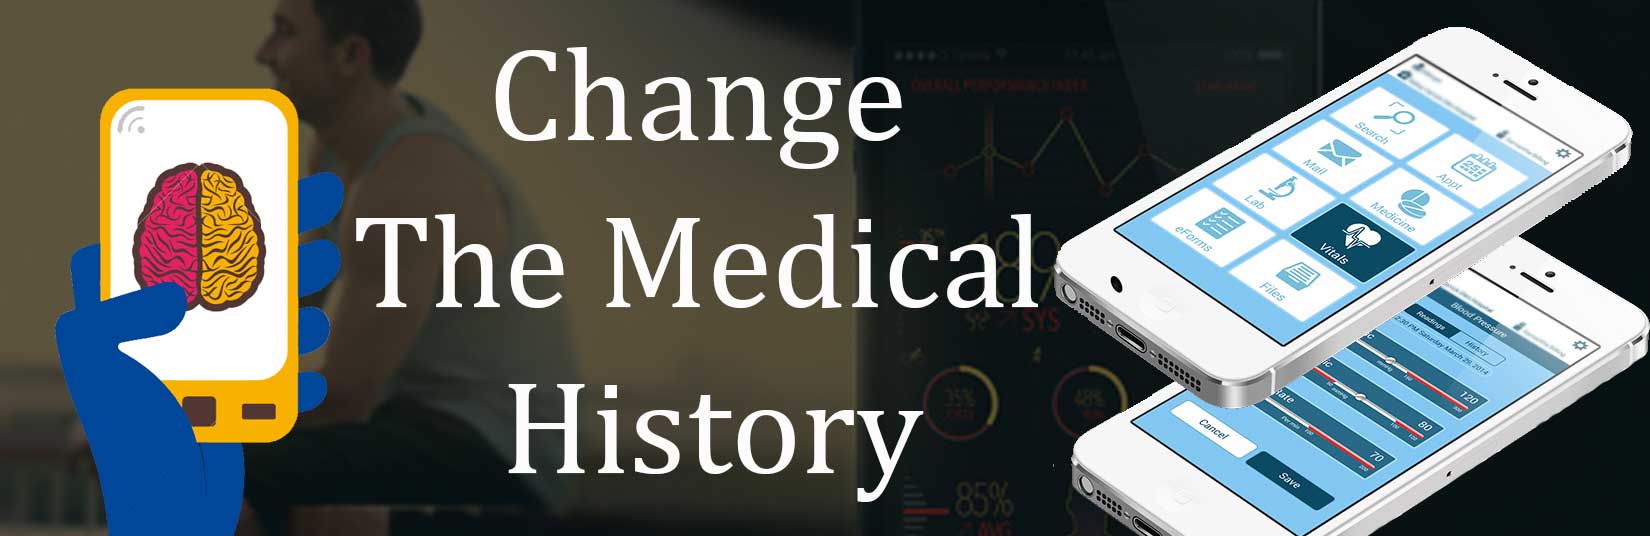 medical history, change medical history